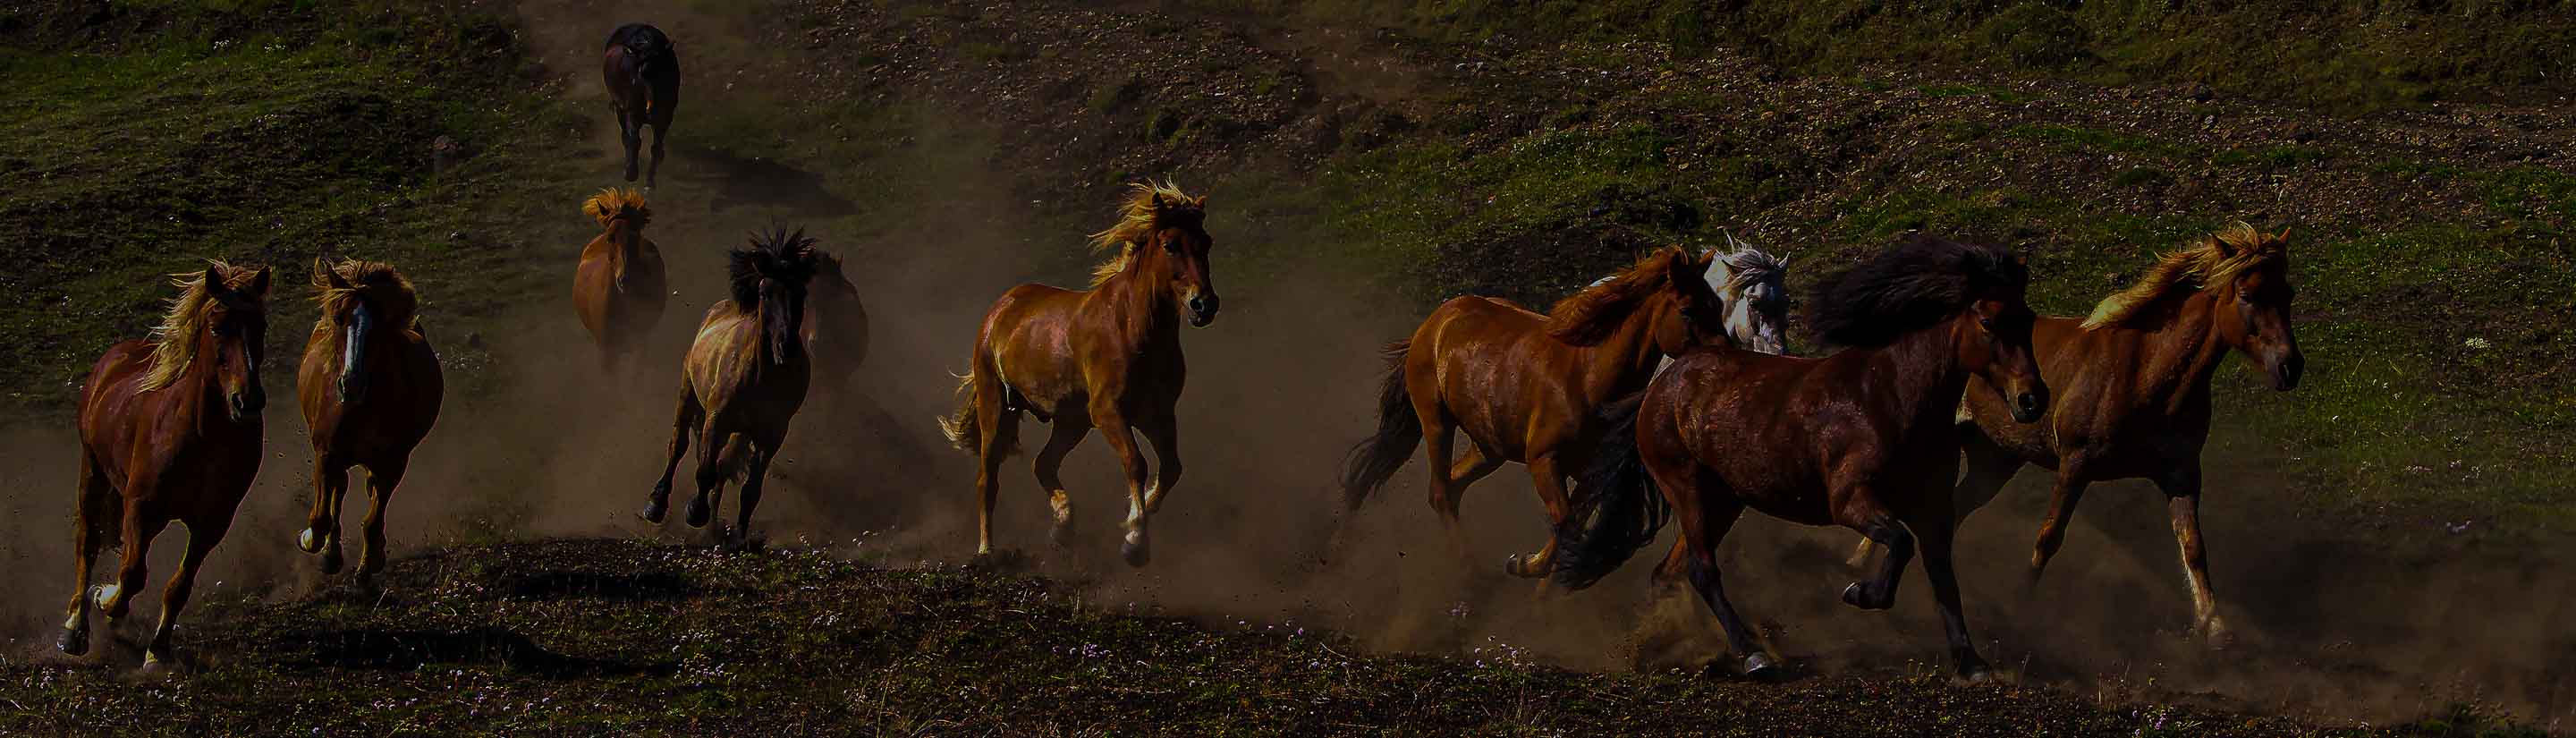 Island Herde wilde Pferde